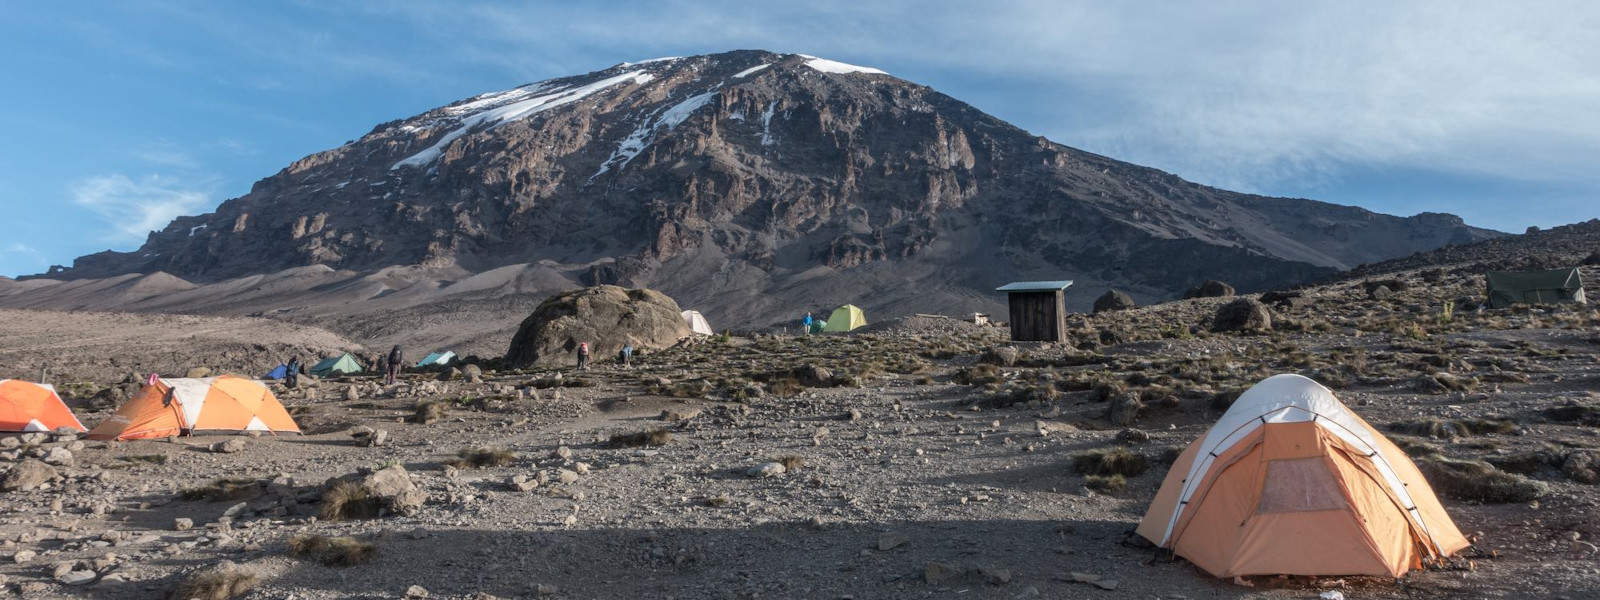 Northern Circuit Route Mt. Kilimanjaro